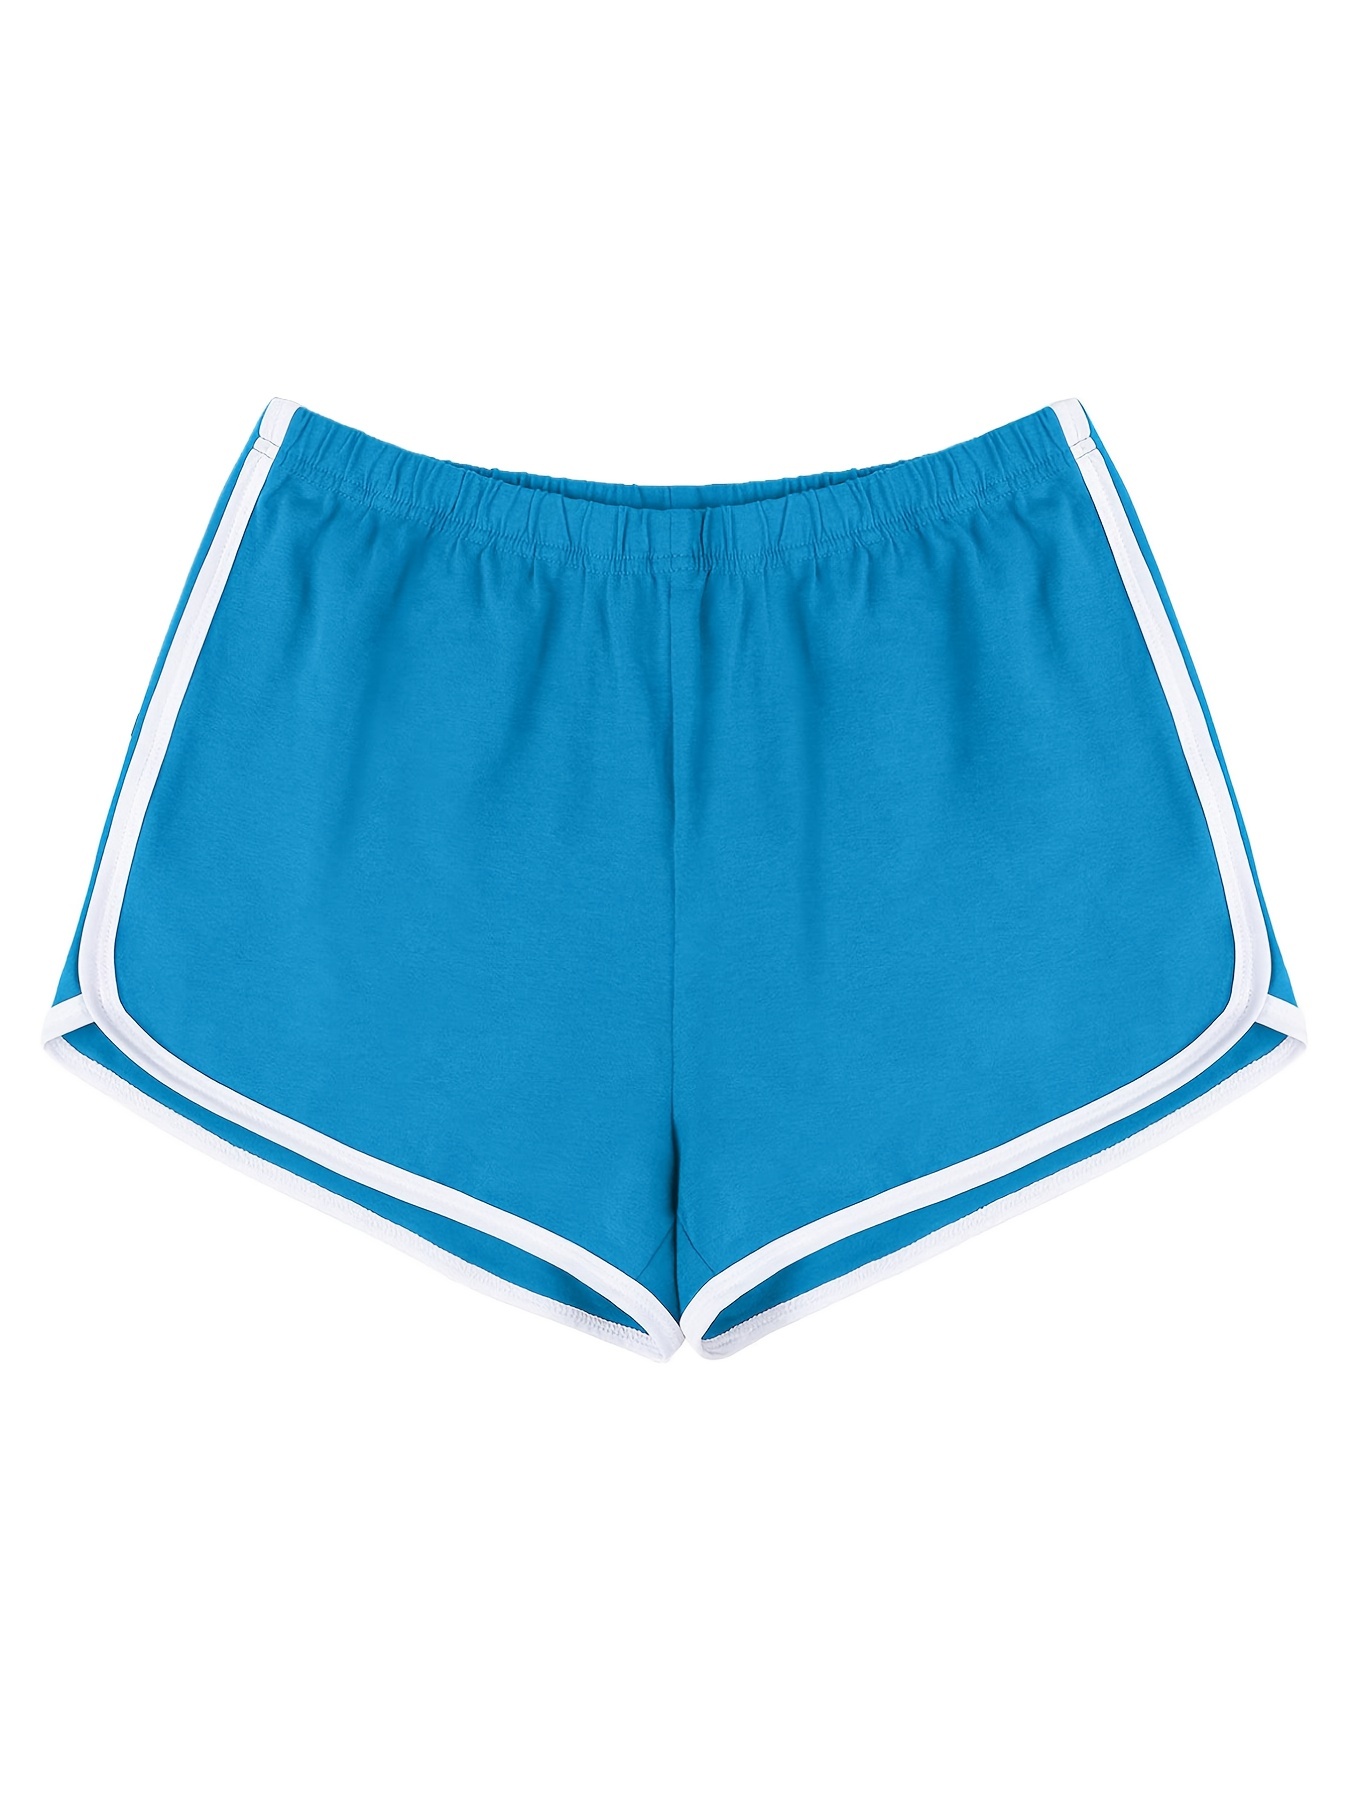 Womens Summer Sexy Sports Shorts Beach Casual Gym Yoga Jogging Panties  Underwear